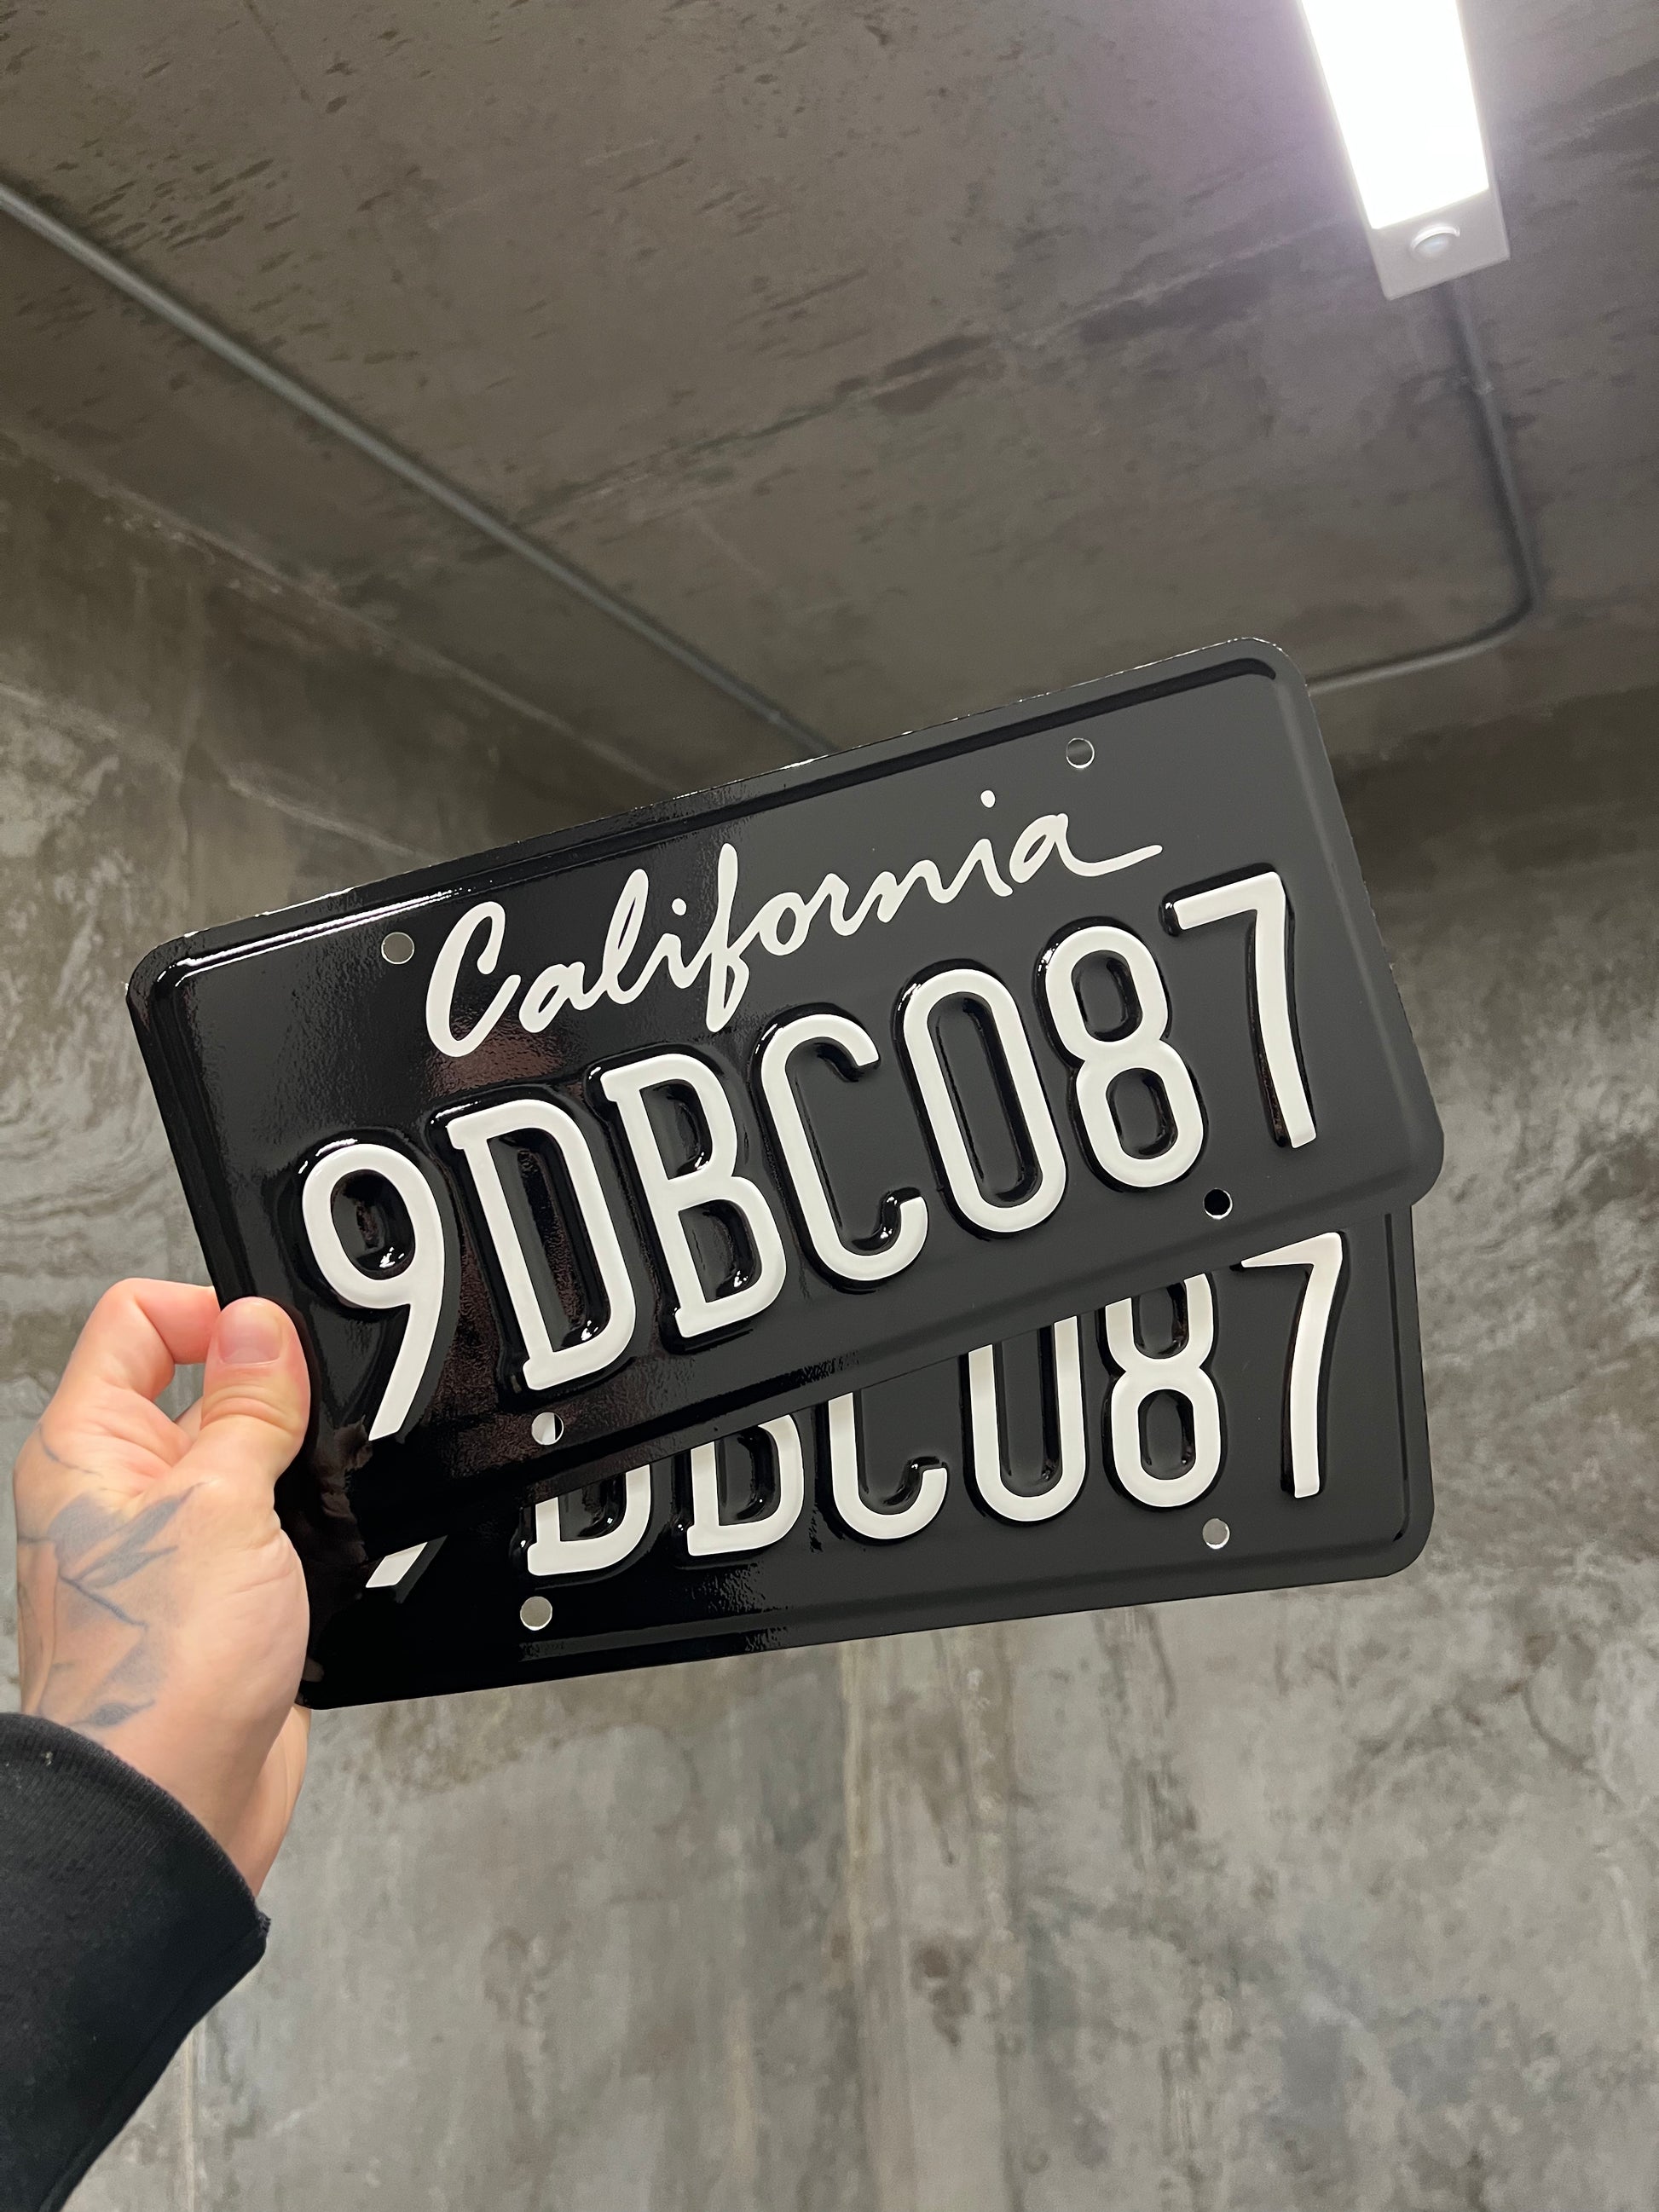 California Black and White License Plate